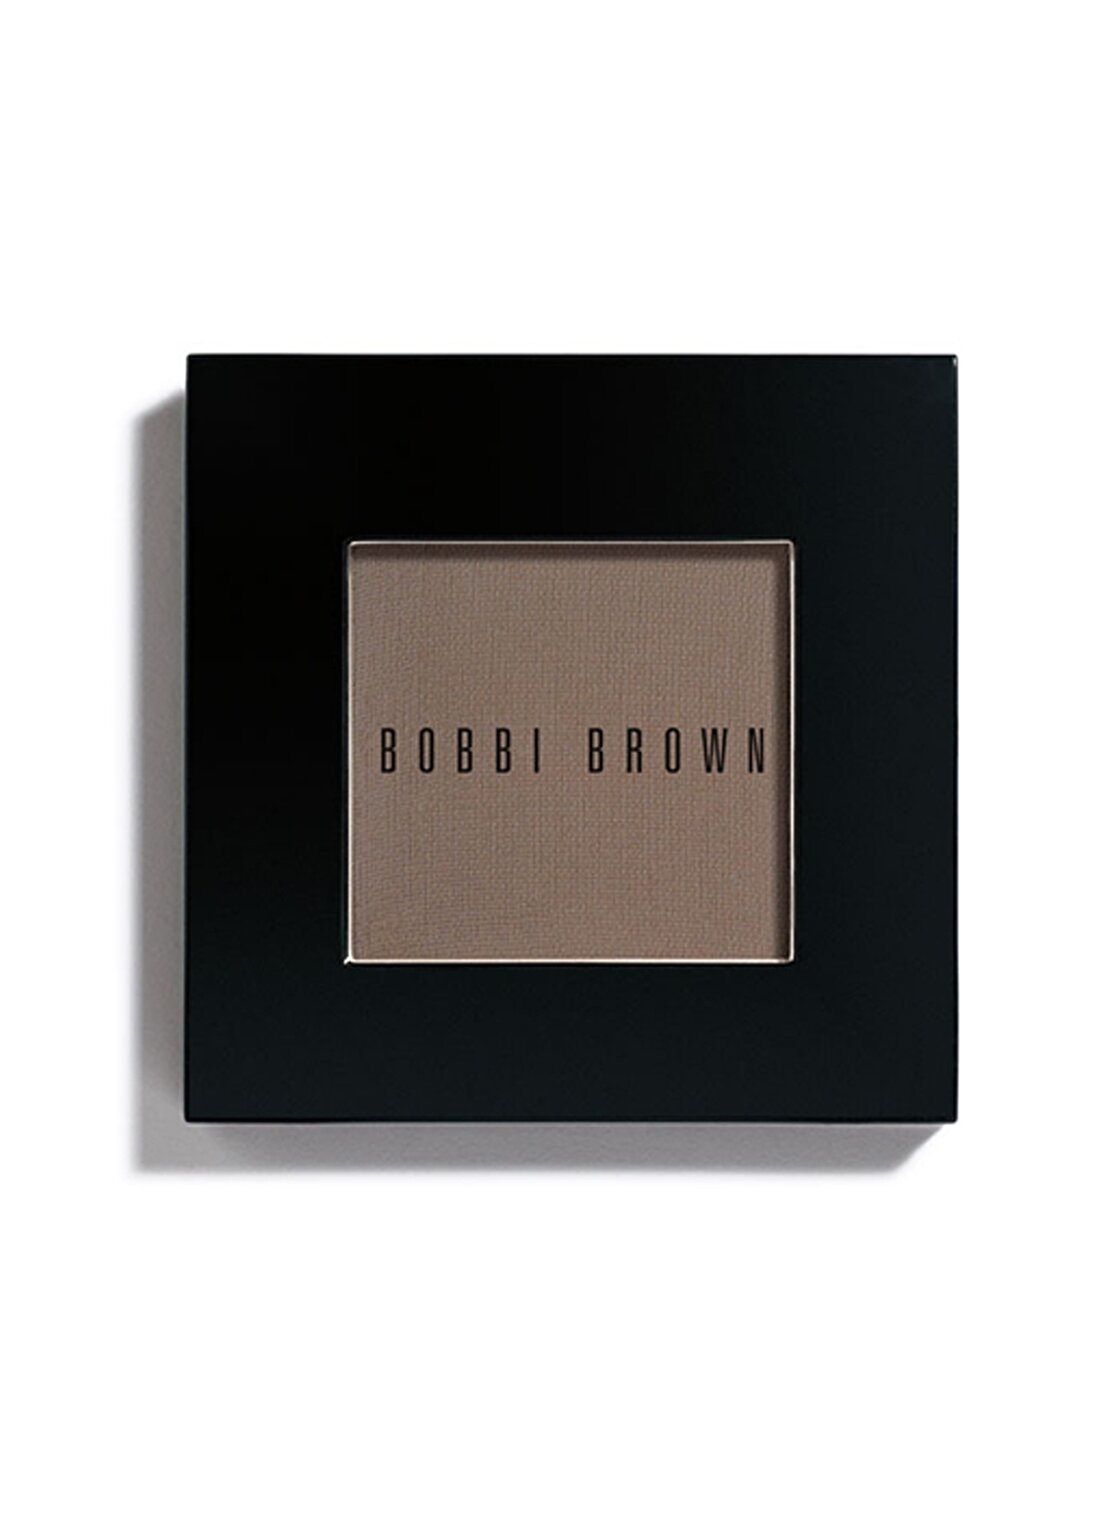 Bobbi Brown Eyeshadow - Pistachio Göz Farı